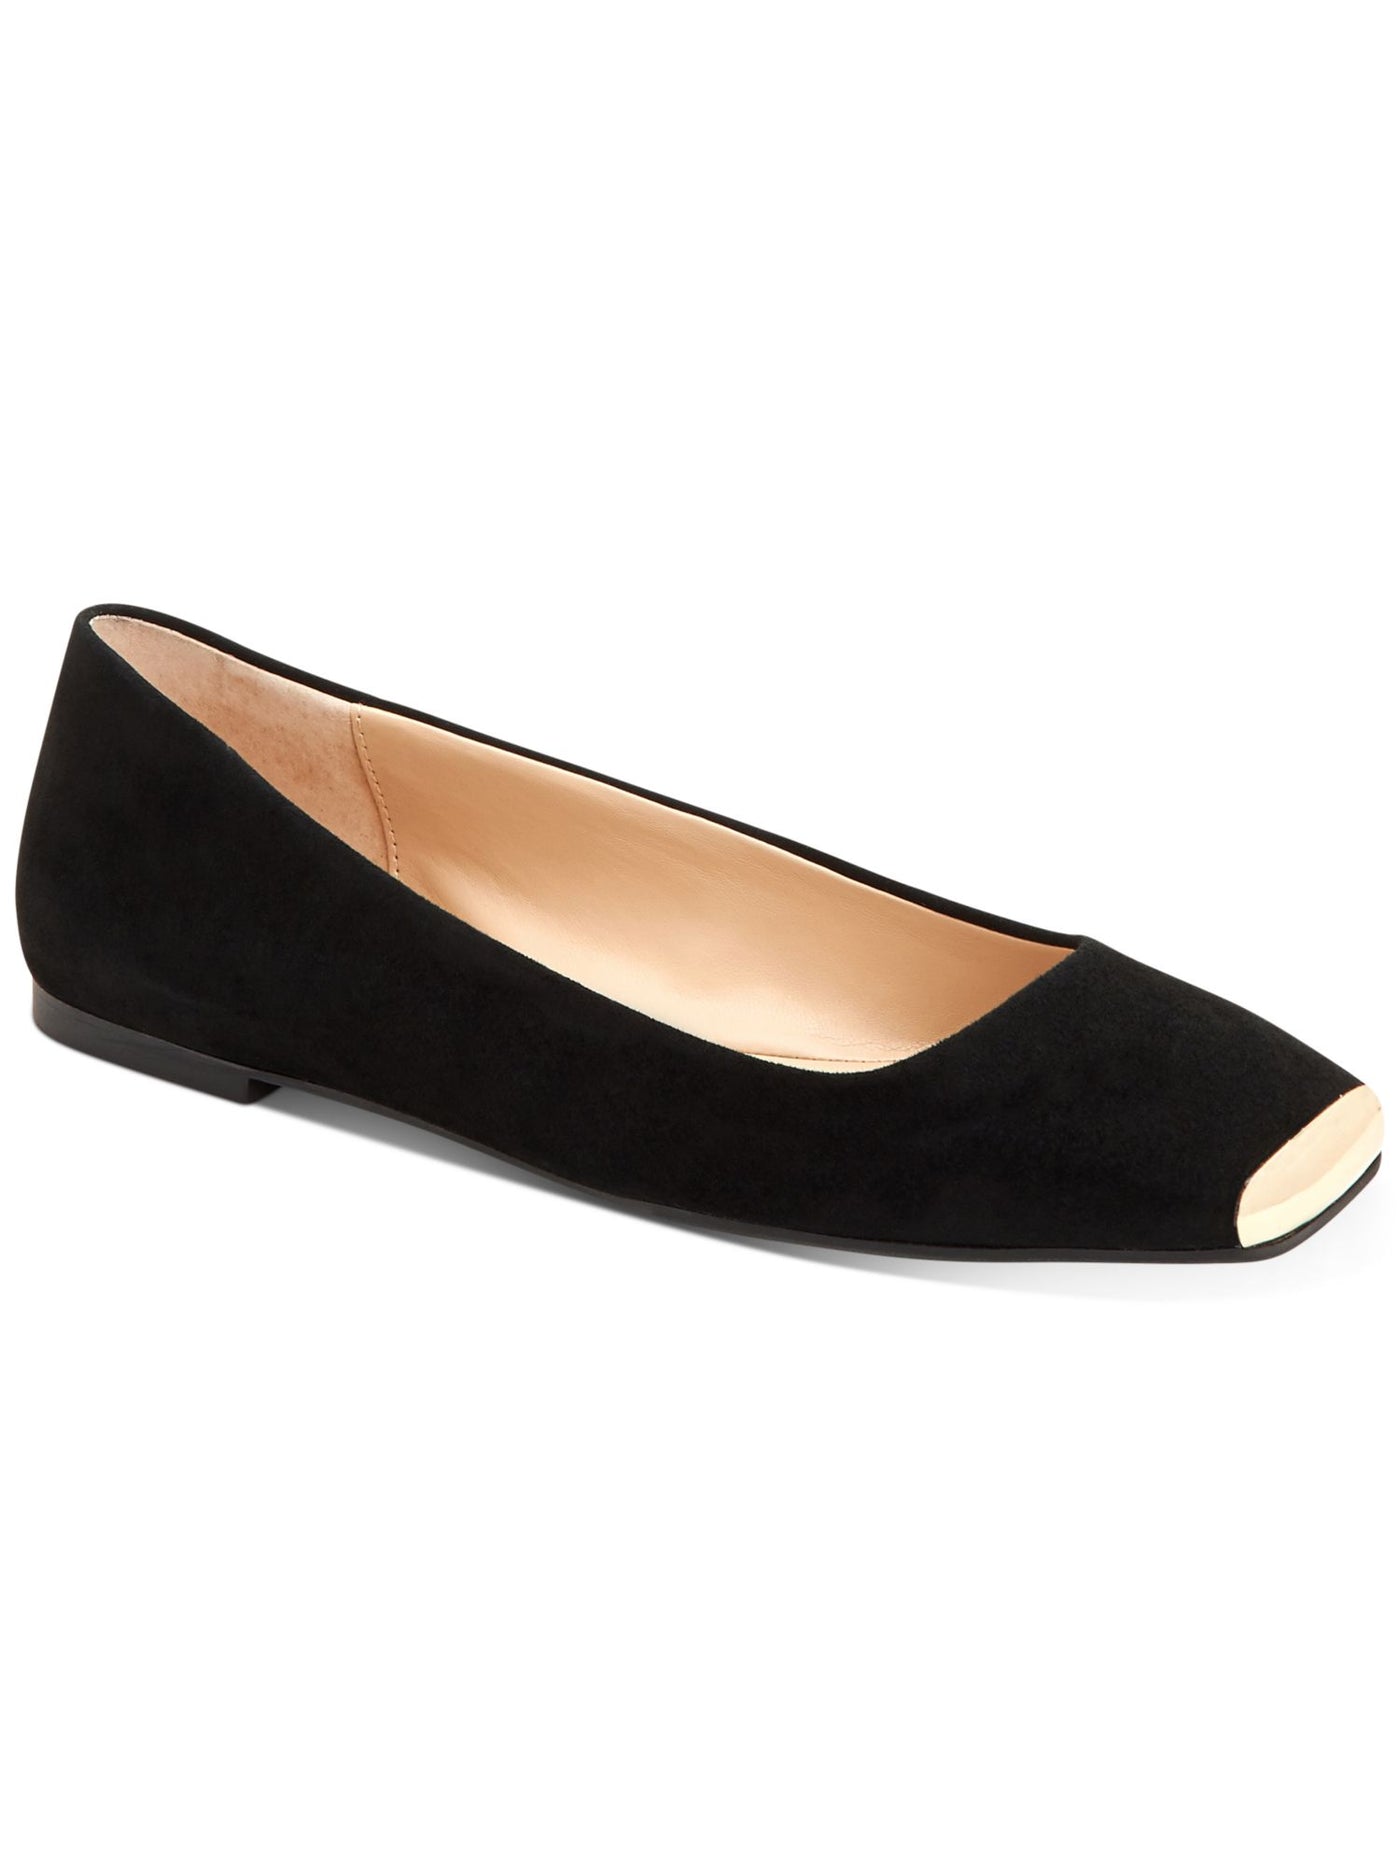 ALFANI Womens Black Toe Plate Padded Neptoon Square Toe Slip On Leather Flats Shoes 12 M